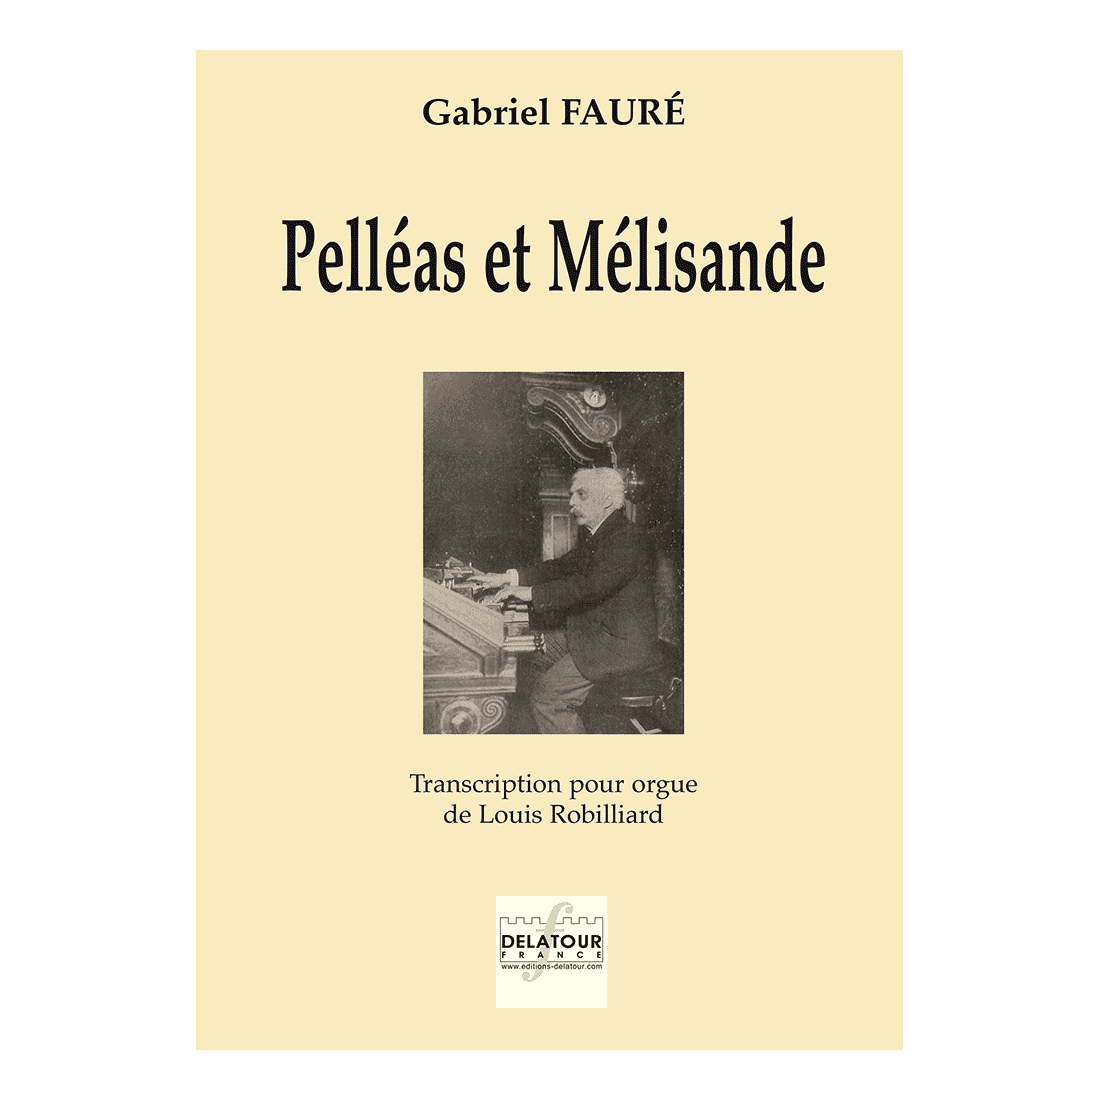 Pelléas et Mélisande for organ